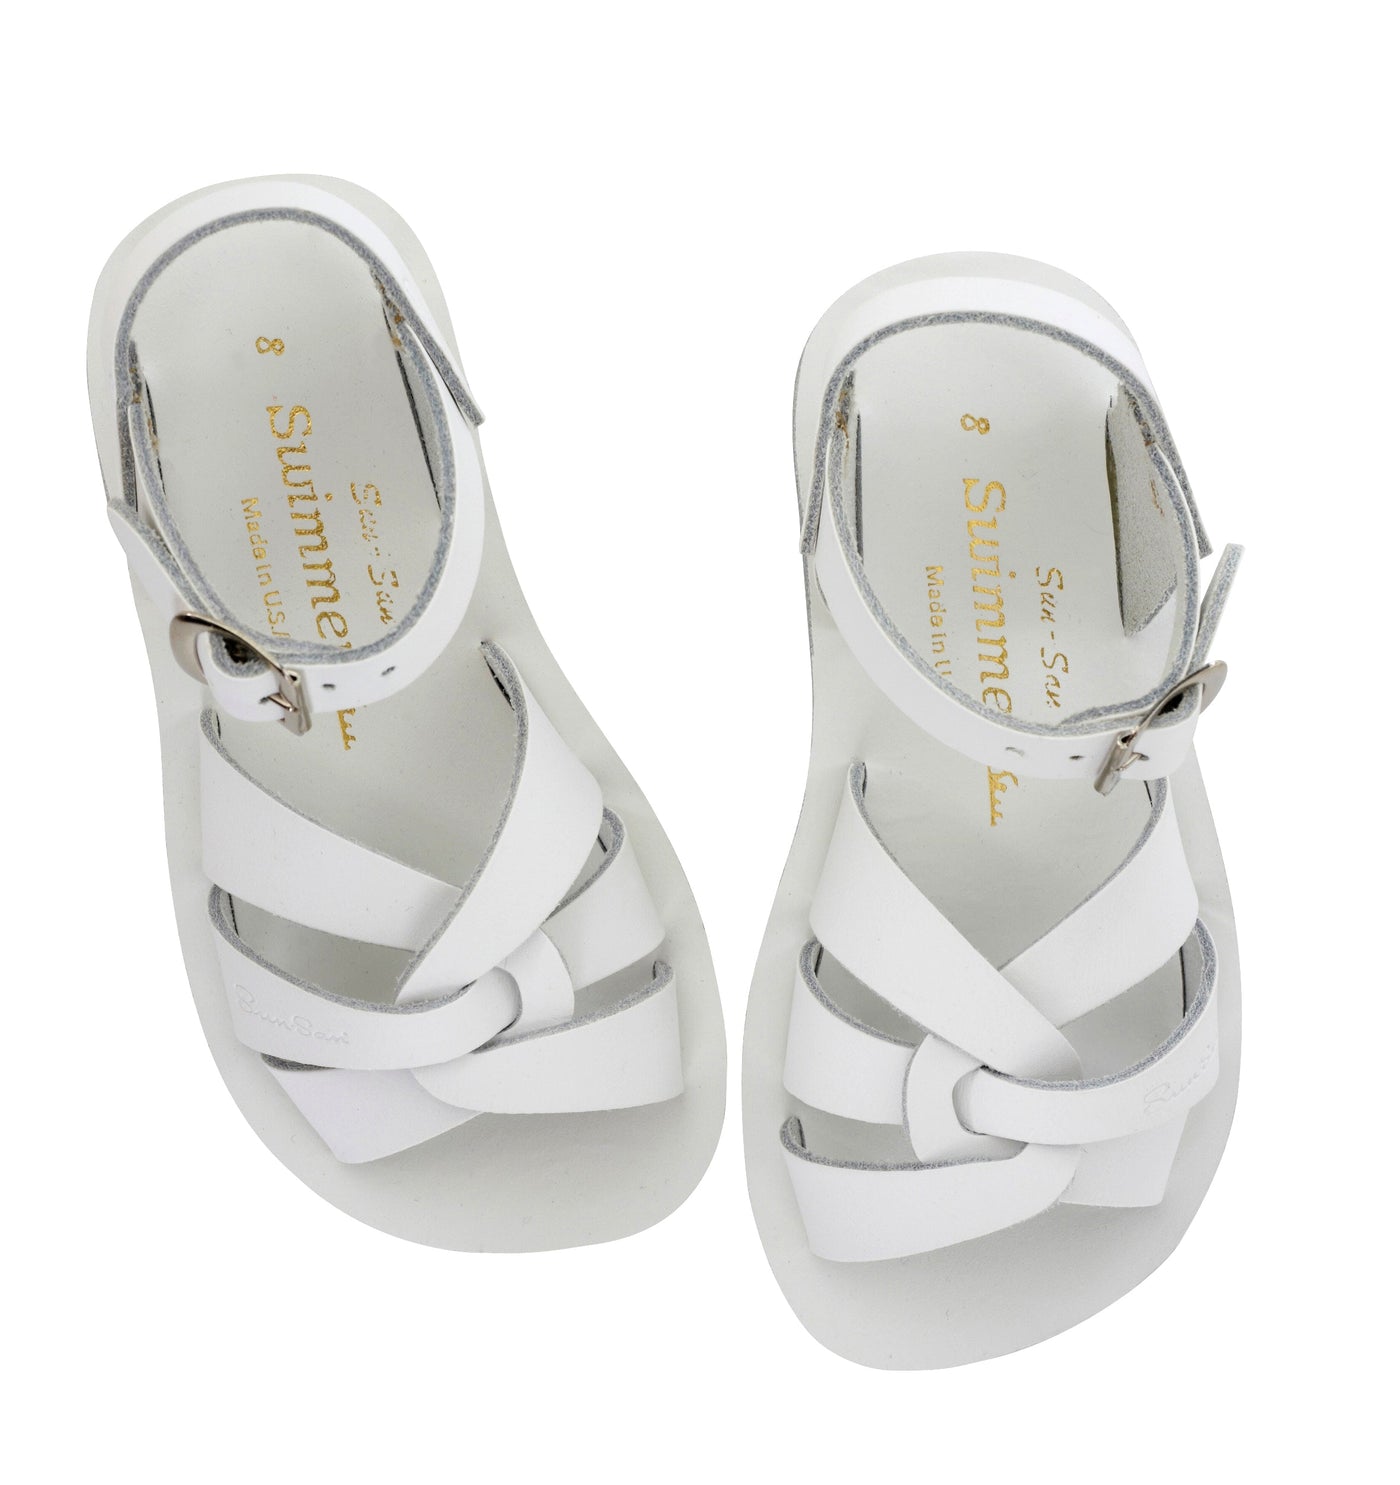 Sun-San Swimmer Sandals - White Sun-San Swimmer Sandals Salt Water Sandals 